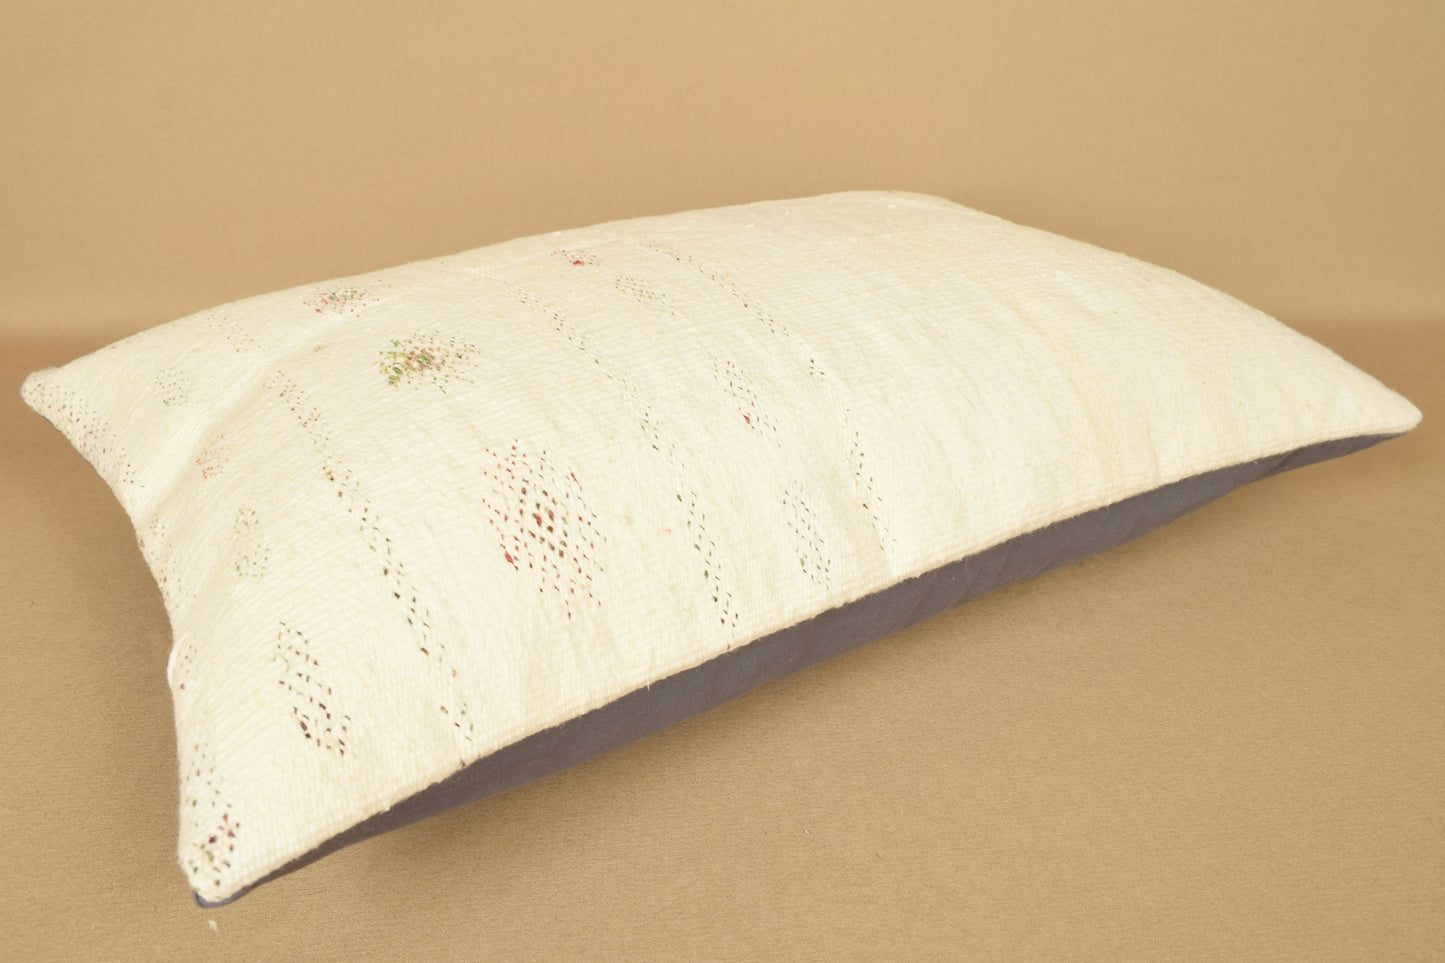 Turkish Kilim Pillow Cover 16x24 " 40x60 cm. E00738